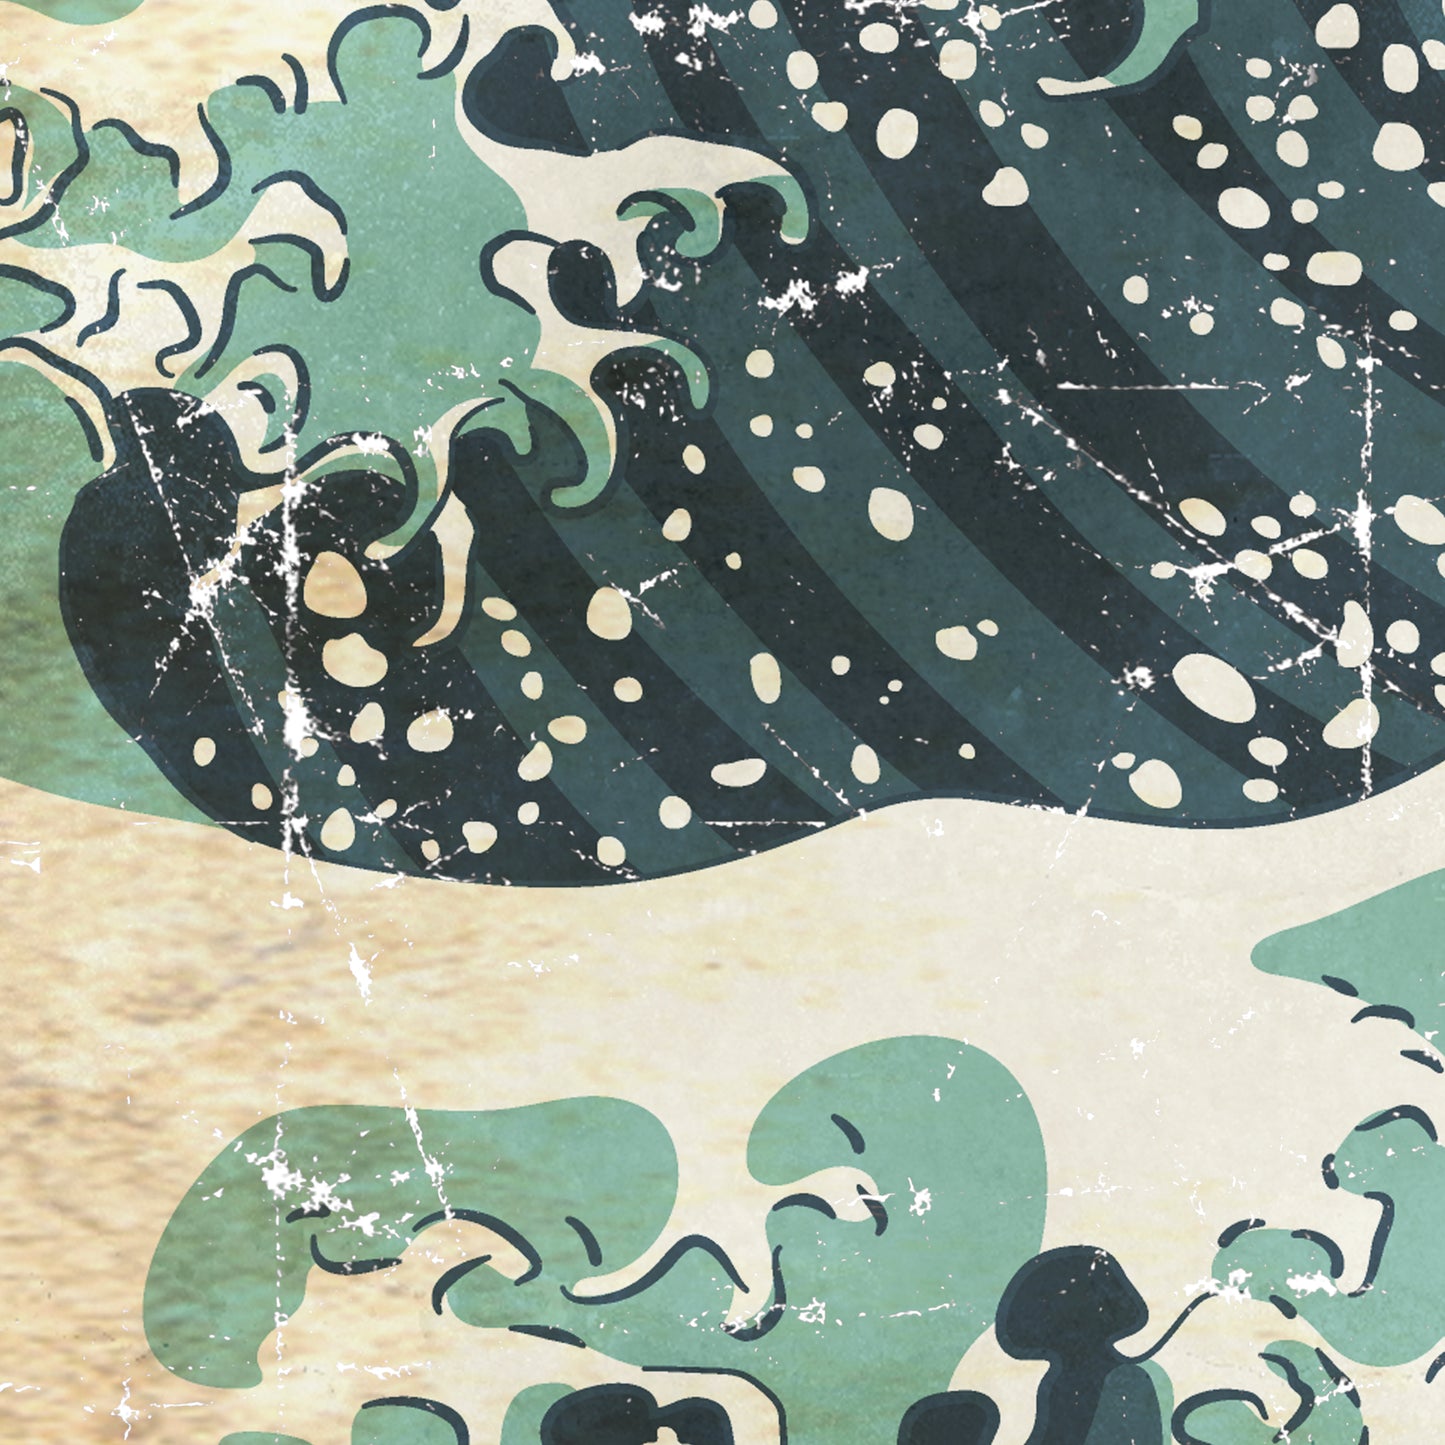 Kanagawa Wave on Papier froissé (Wrinkled paper)